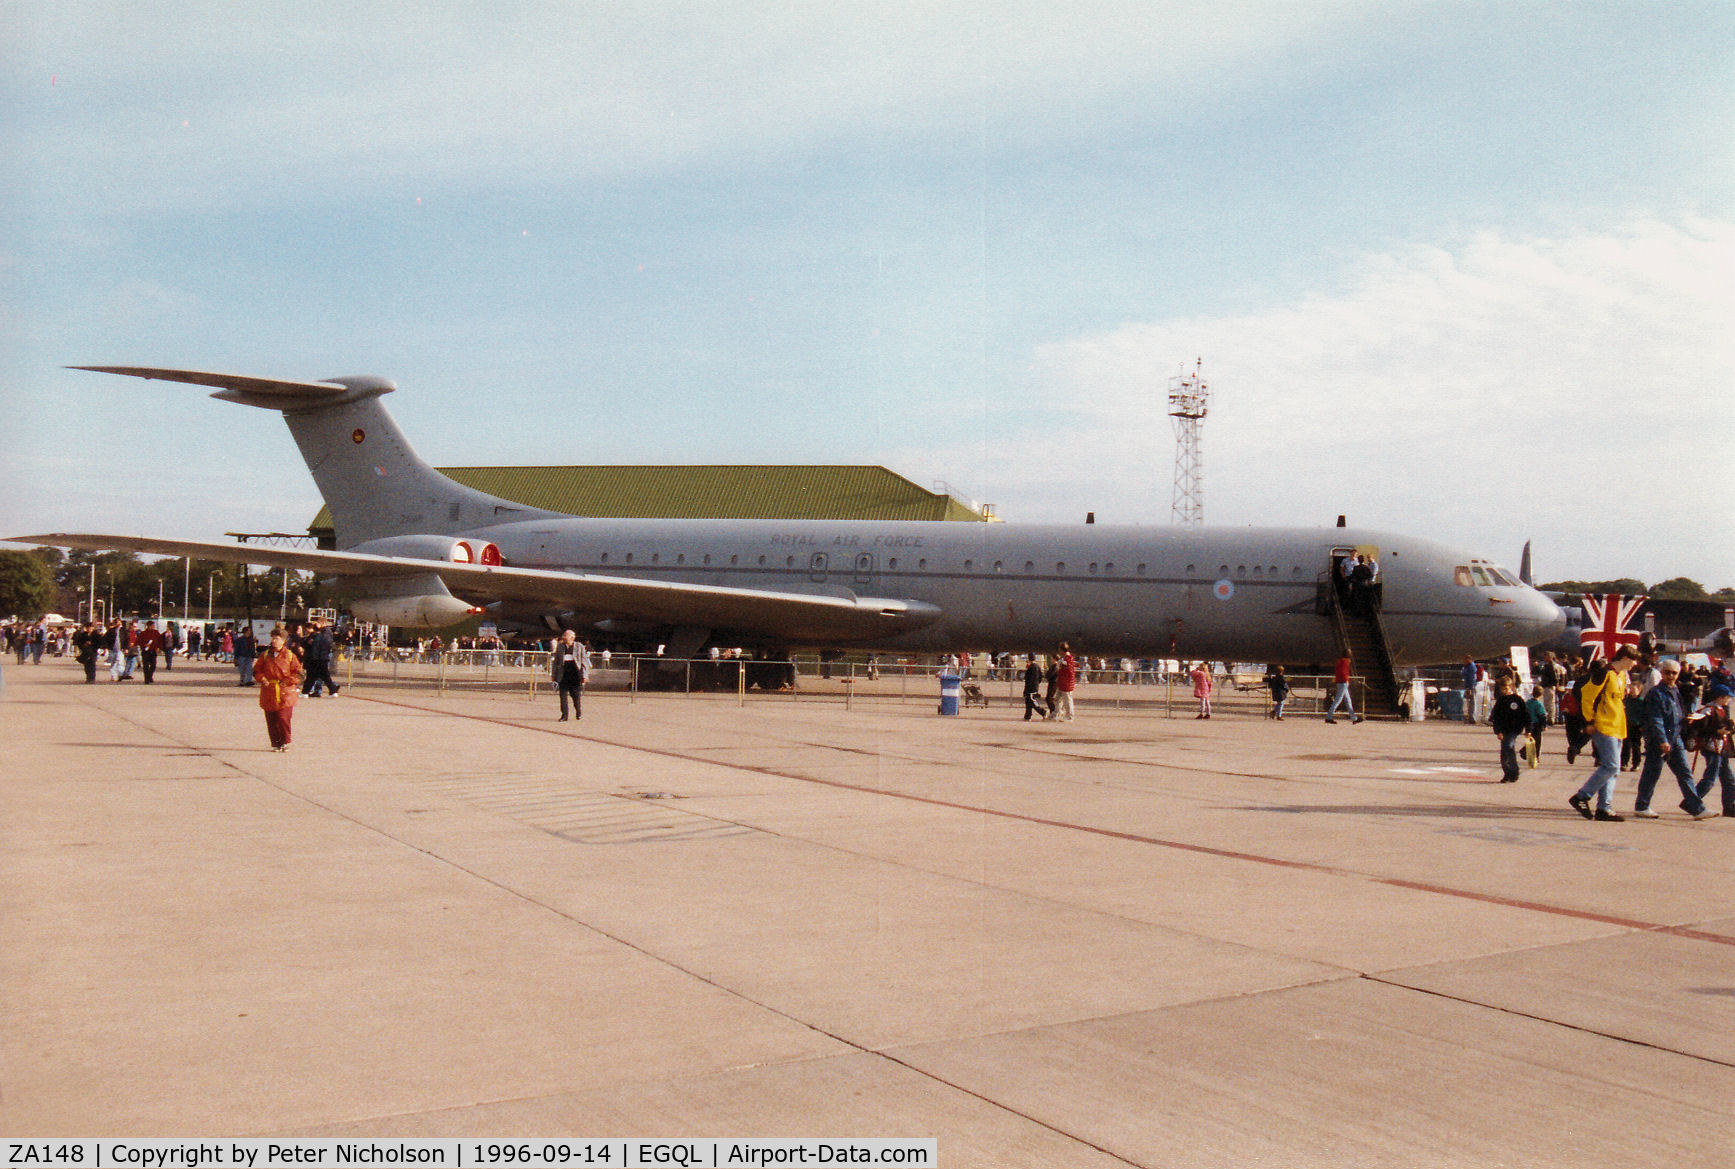 ZA148, 1967 Vickers VC10 K.3 C/N 883, VC-10 K.3, callsign Ascot 880, of 101 Squadron at RAF Brize Norton on display at the 1996 RAF Leuchars Airshow.